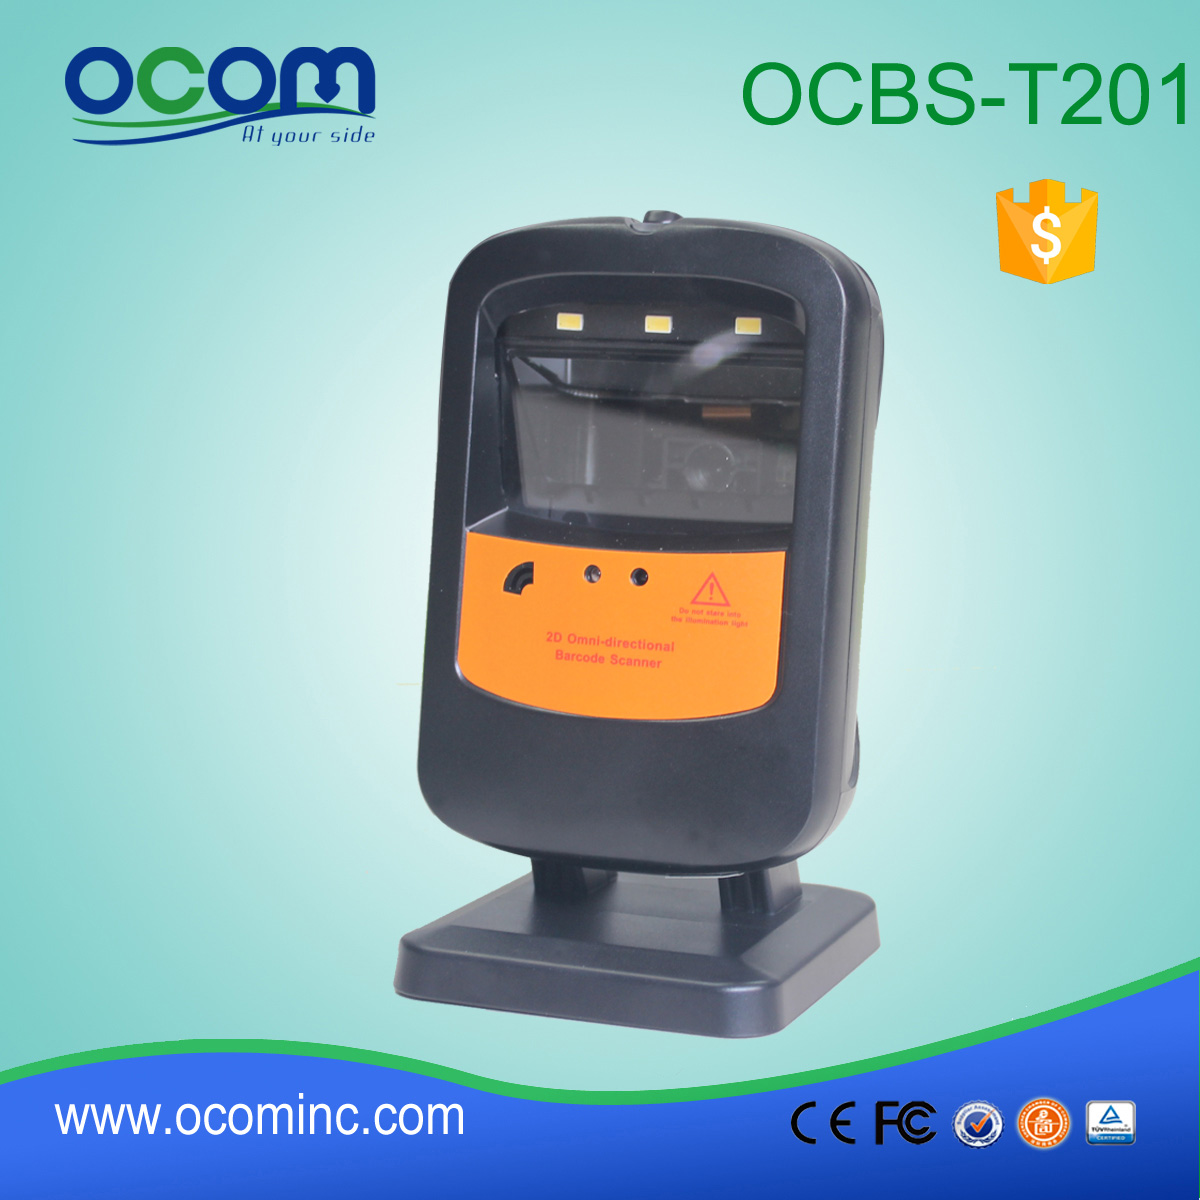 2015 más reciente 2D Omni-directionaI imagen Barcode Scanner OCBS-T201